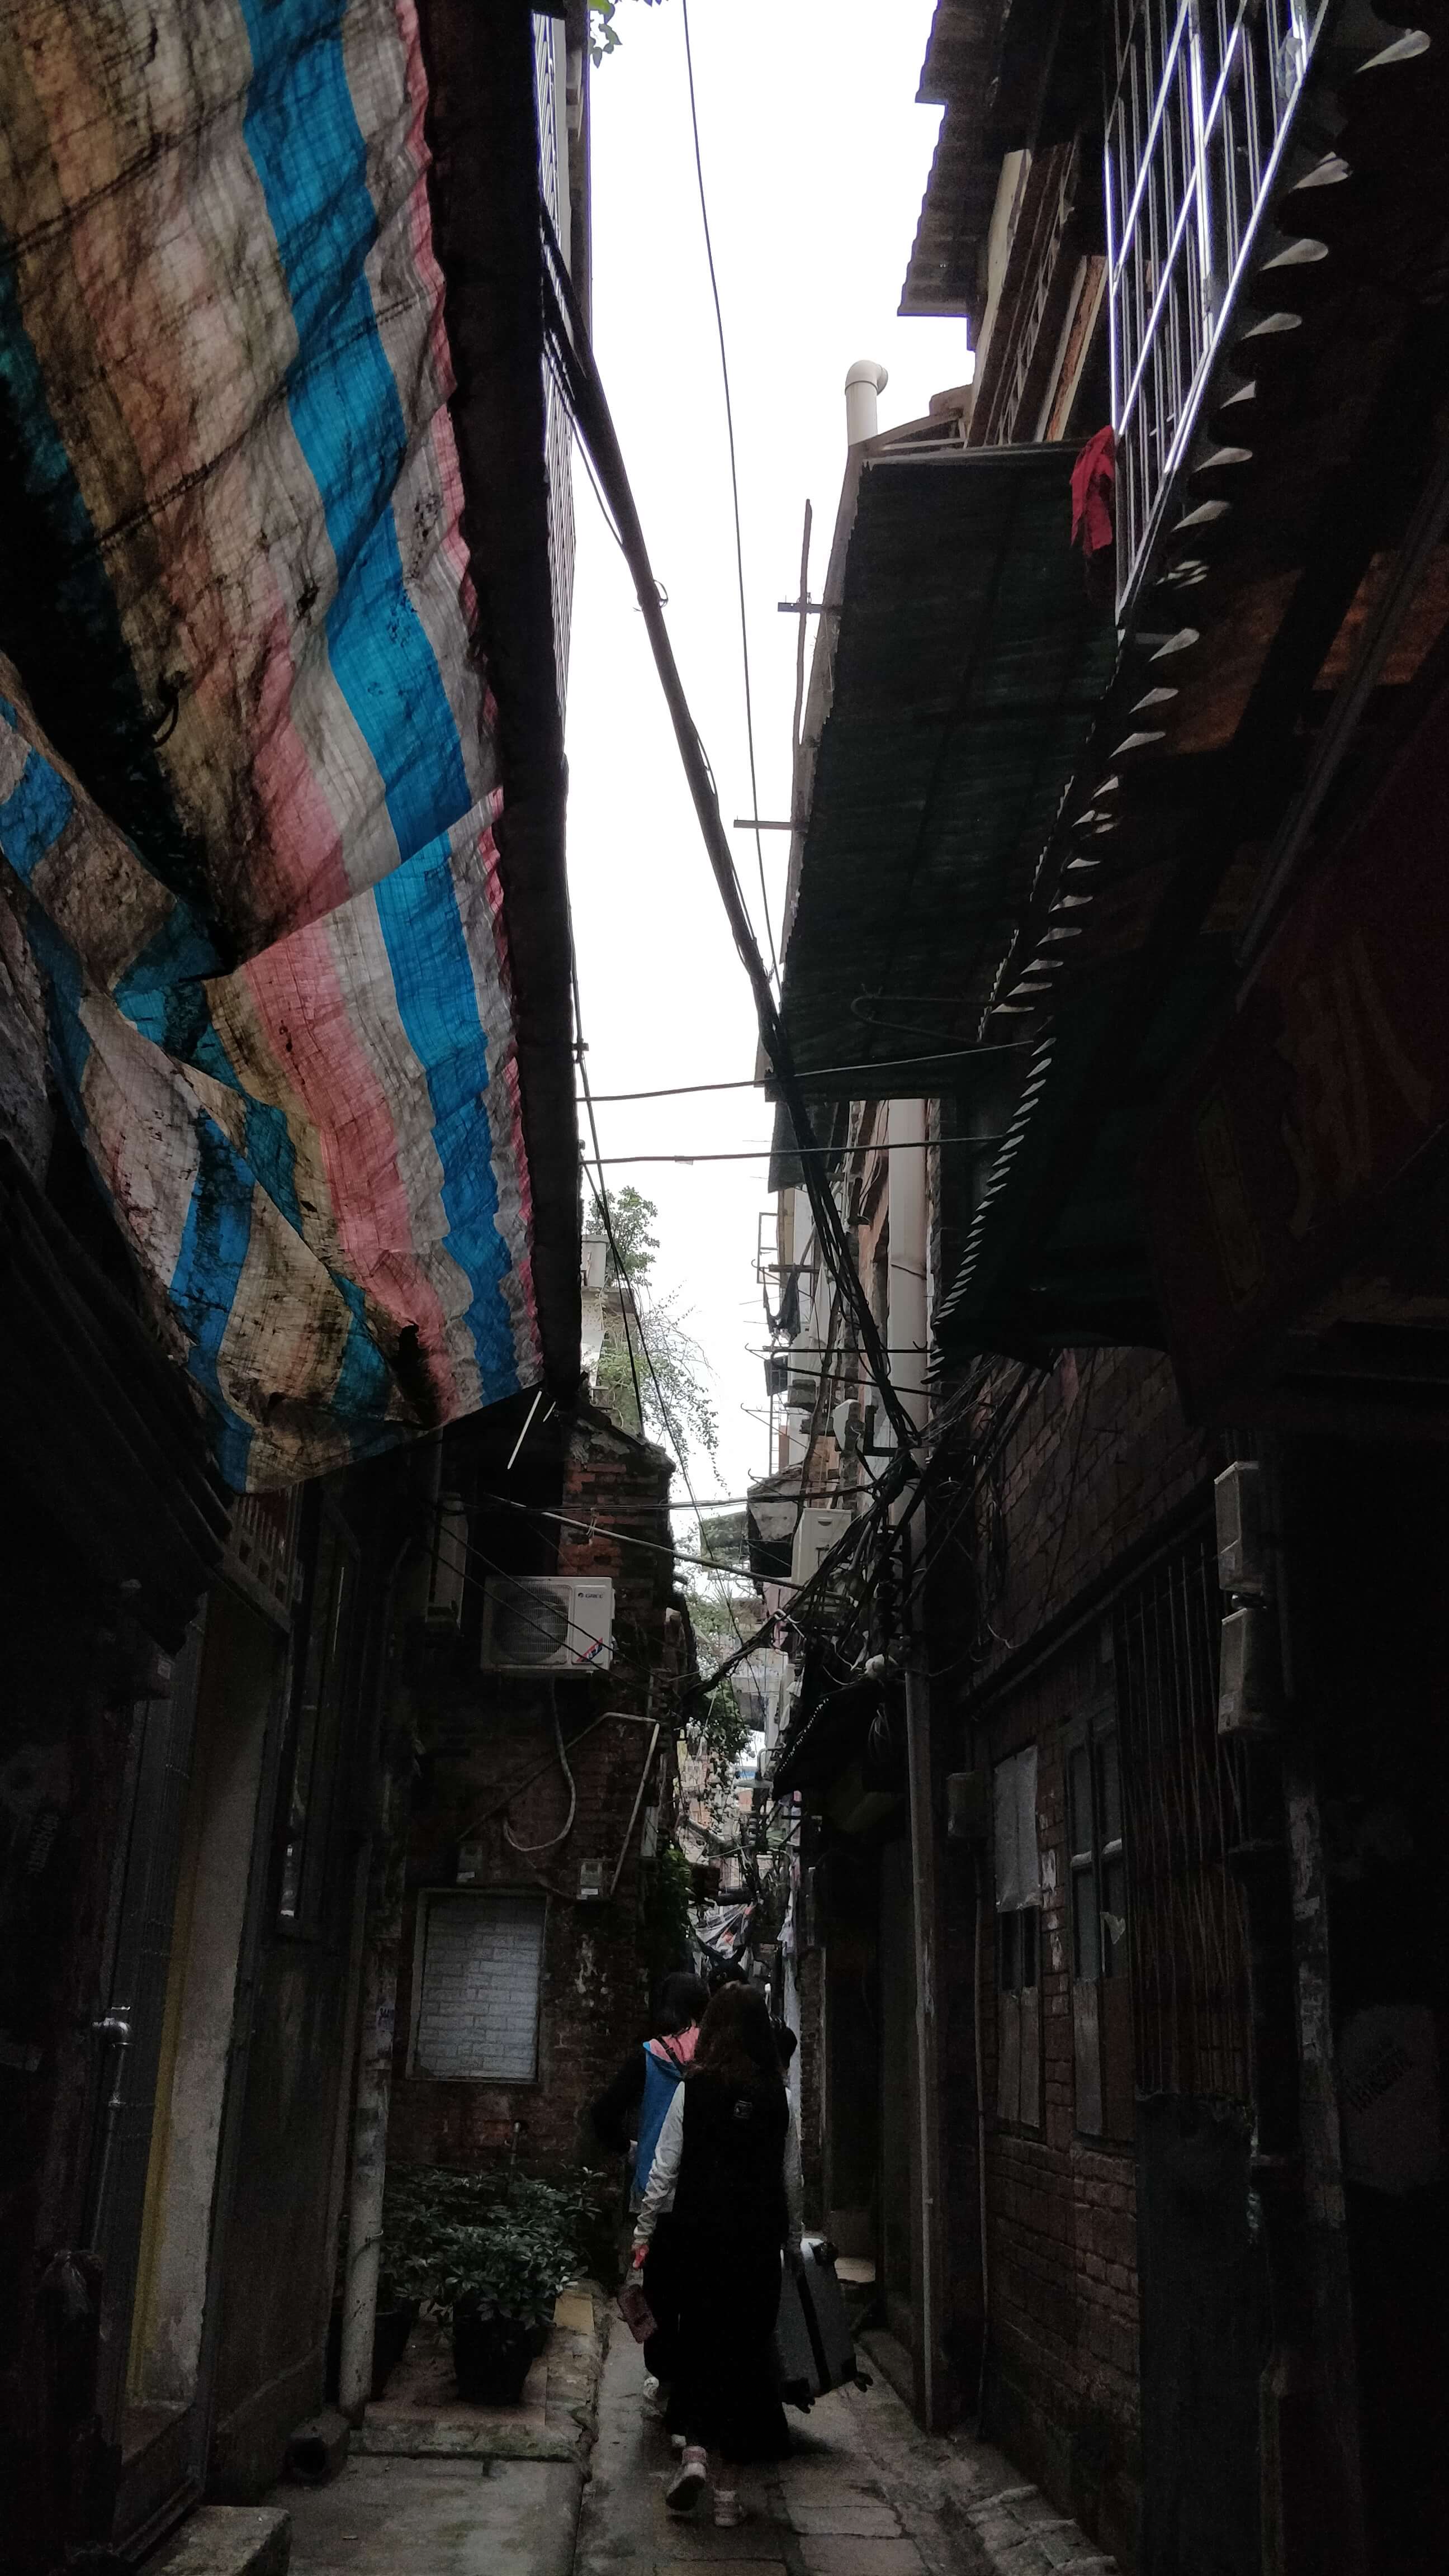 An alleyway in Daxin